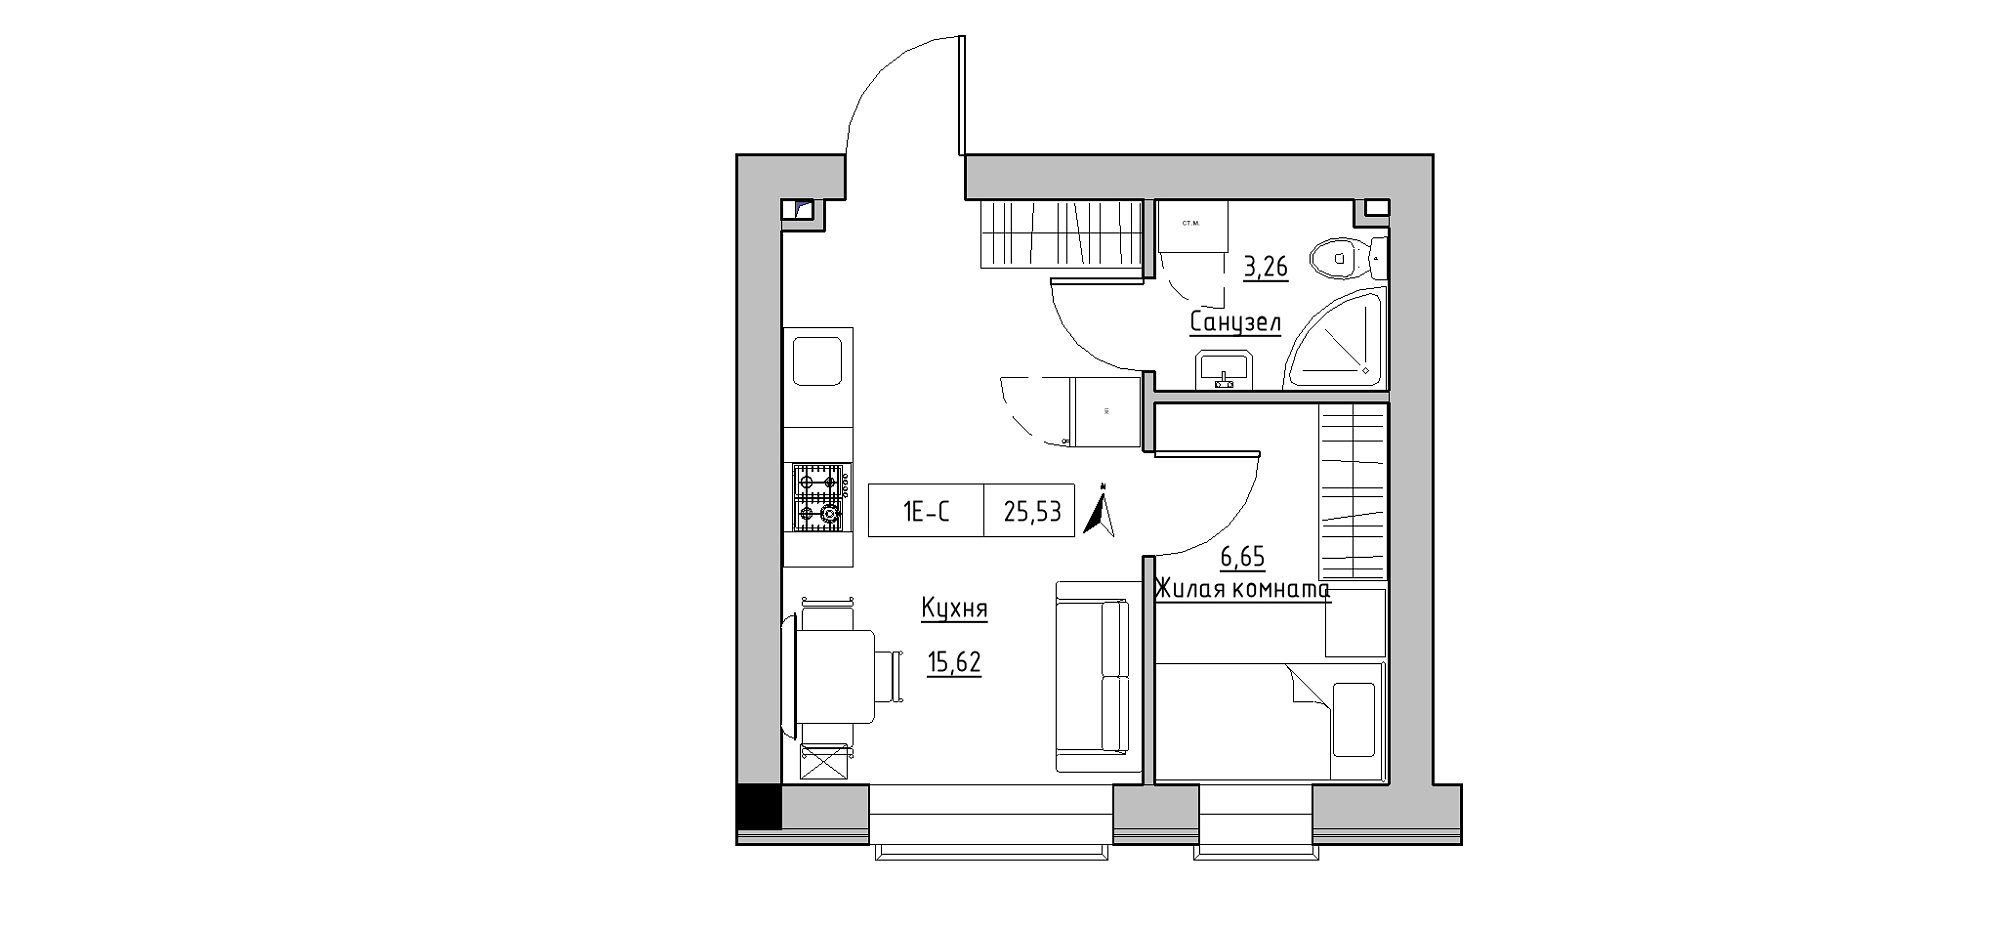 Planning 1-rm flats area 25.53m2, KS-020-04/0004.